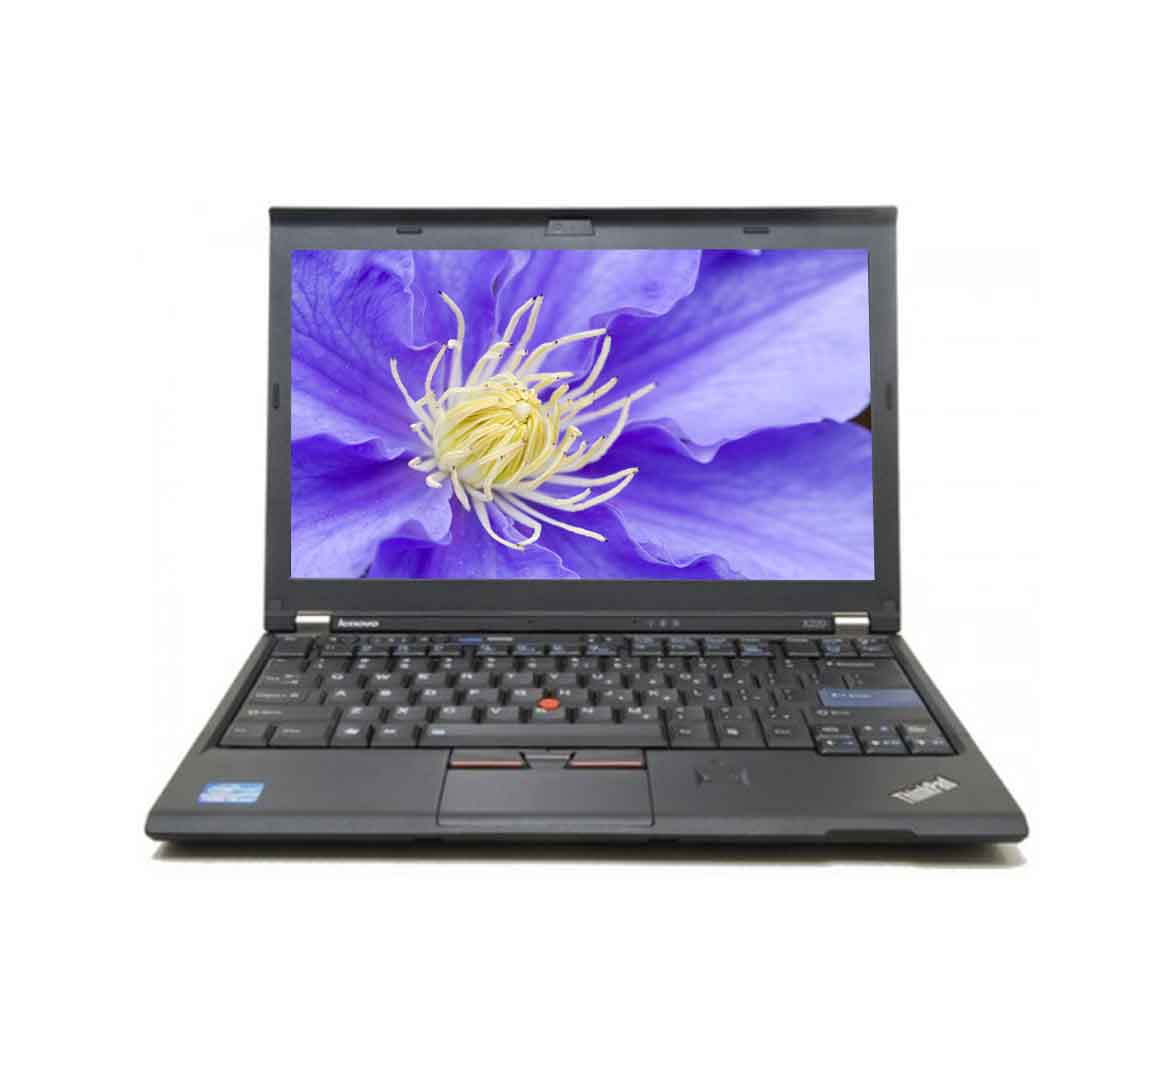 Lenovo ThinkPad X230 Business Laptop, Intel Core i7-3rd Generation CPU, 4GB RAM, 500GB HDD, 12 inch Display, Windows 10 Pro